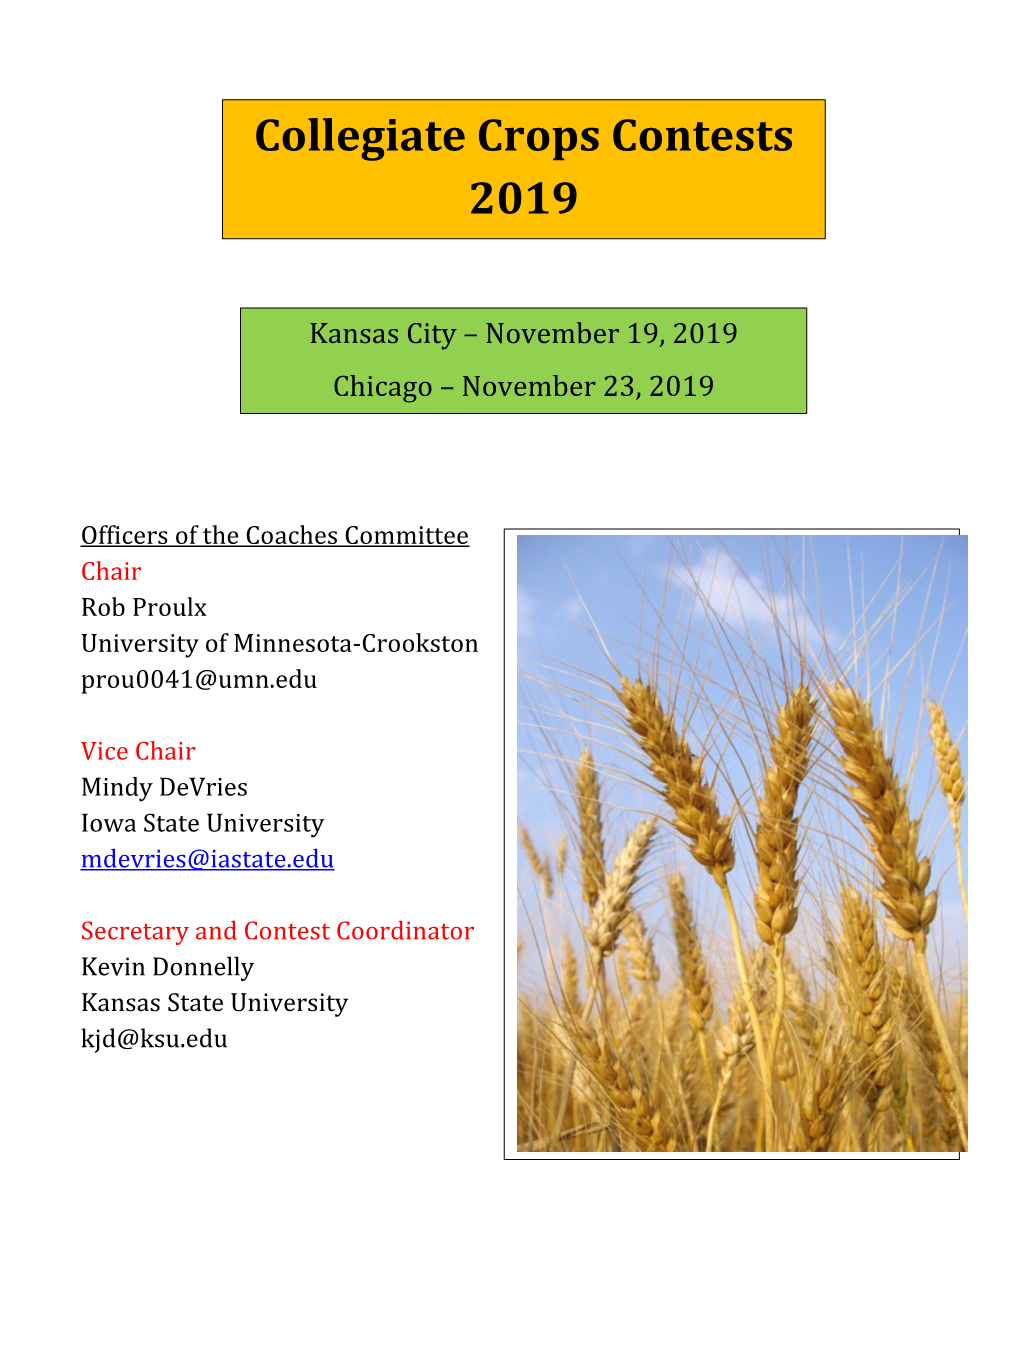 Collegiate Crops Contests 2019